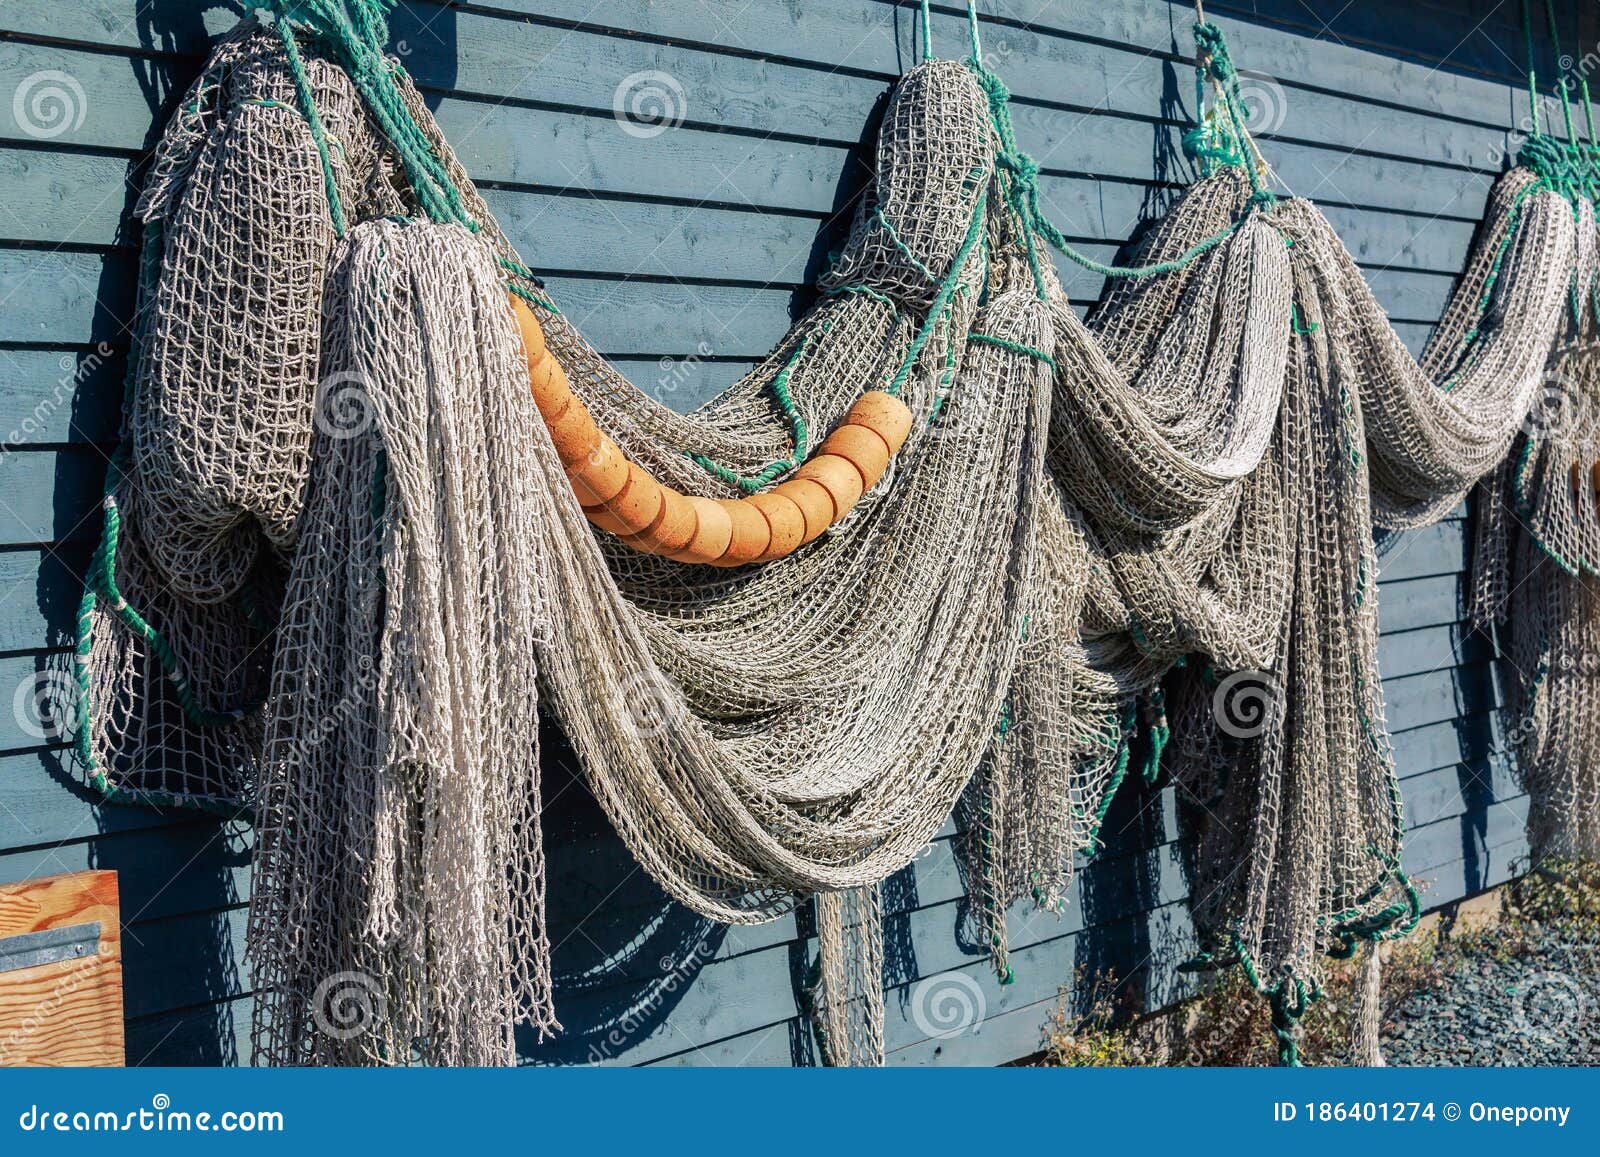 Newfoundland fish nets stock photo. Image of dangling - 186401274